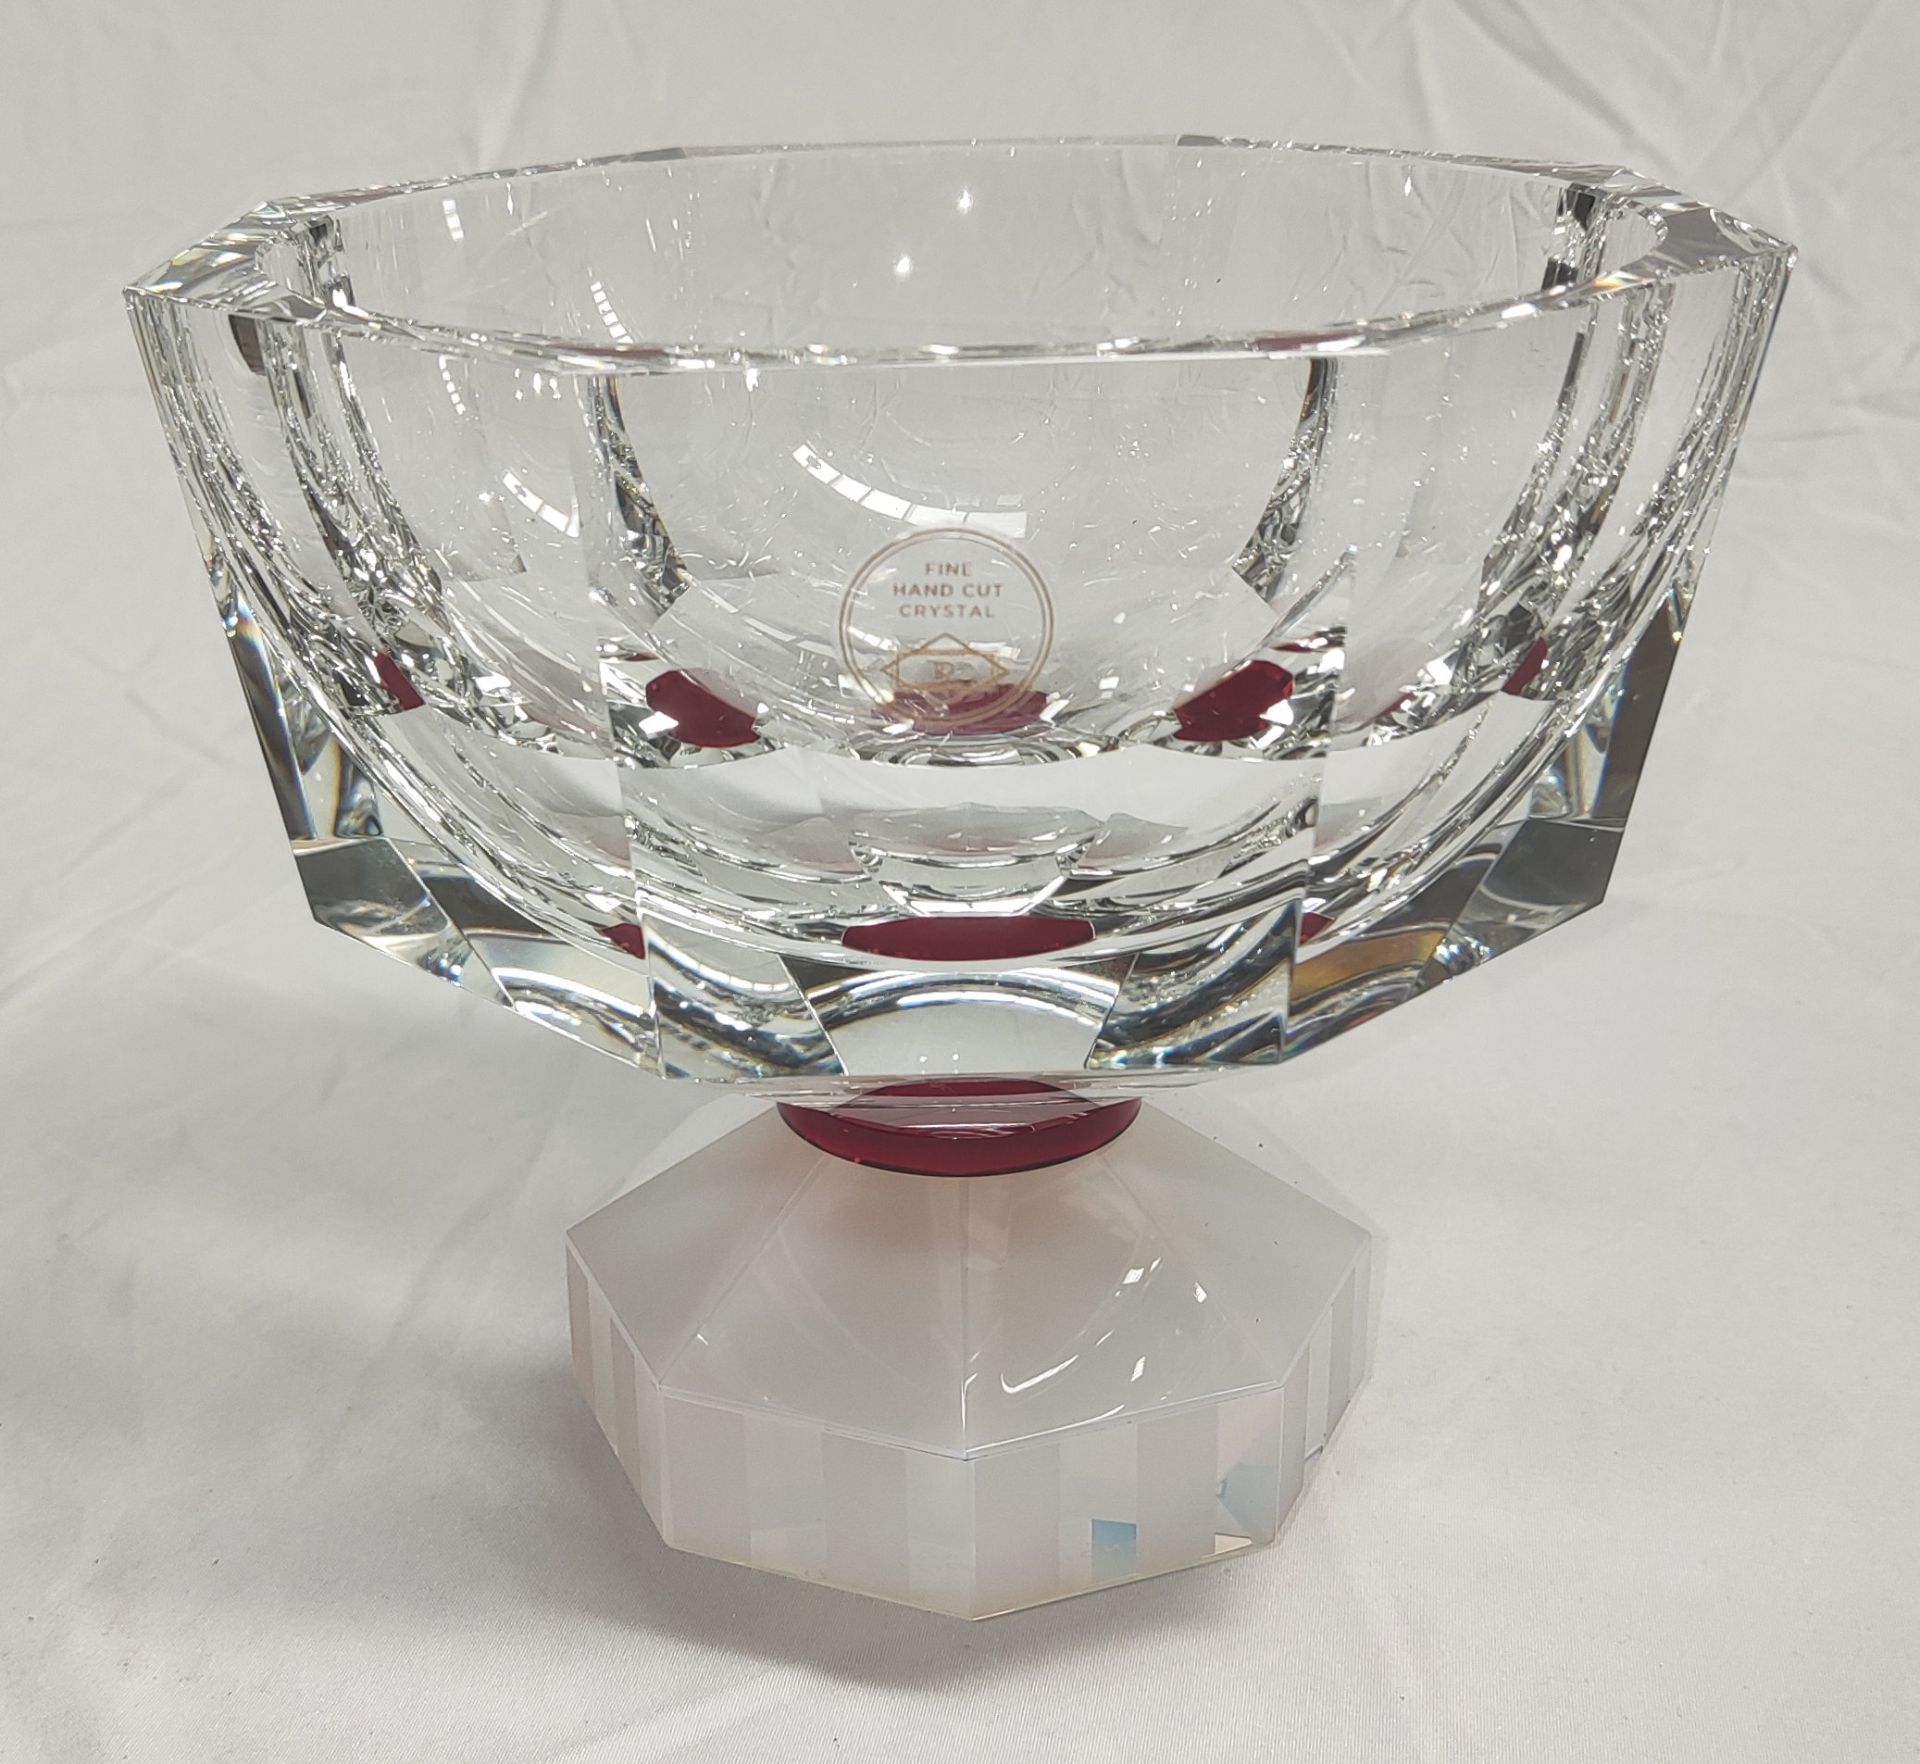 1 x REFLECTIONS COPENHAGEN Halifax Hand-Cut Crystal Glass Bowl In Clear/Milk/Plum - Original RRP £ - Image 9 of 21